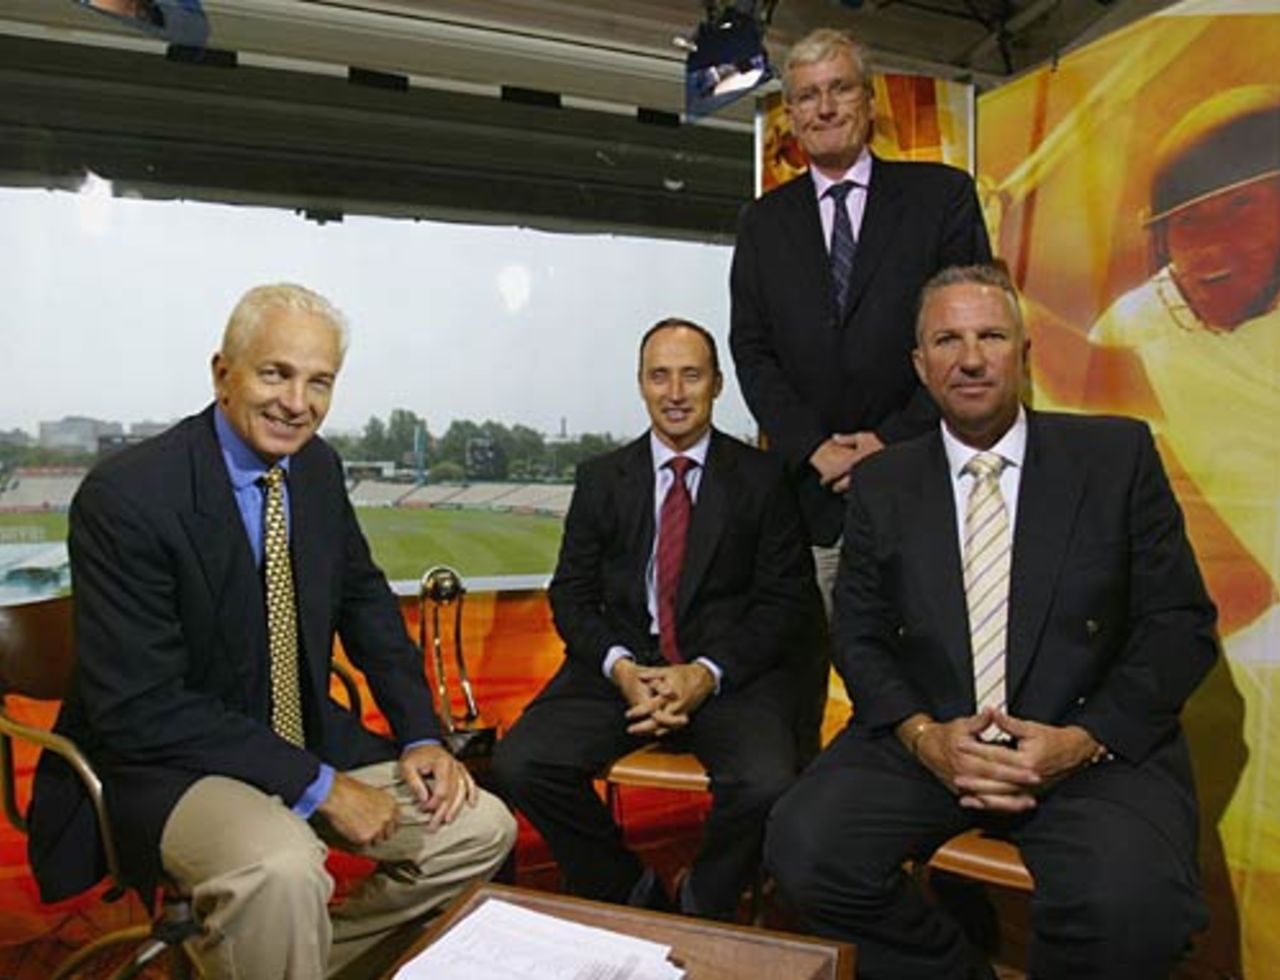 The BSkyB commentary team: David Gower, Nasser Hussain, Bob Willis, Ian Botham, South Africa, January 2005